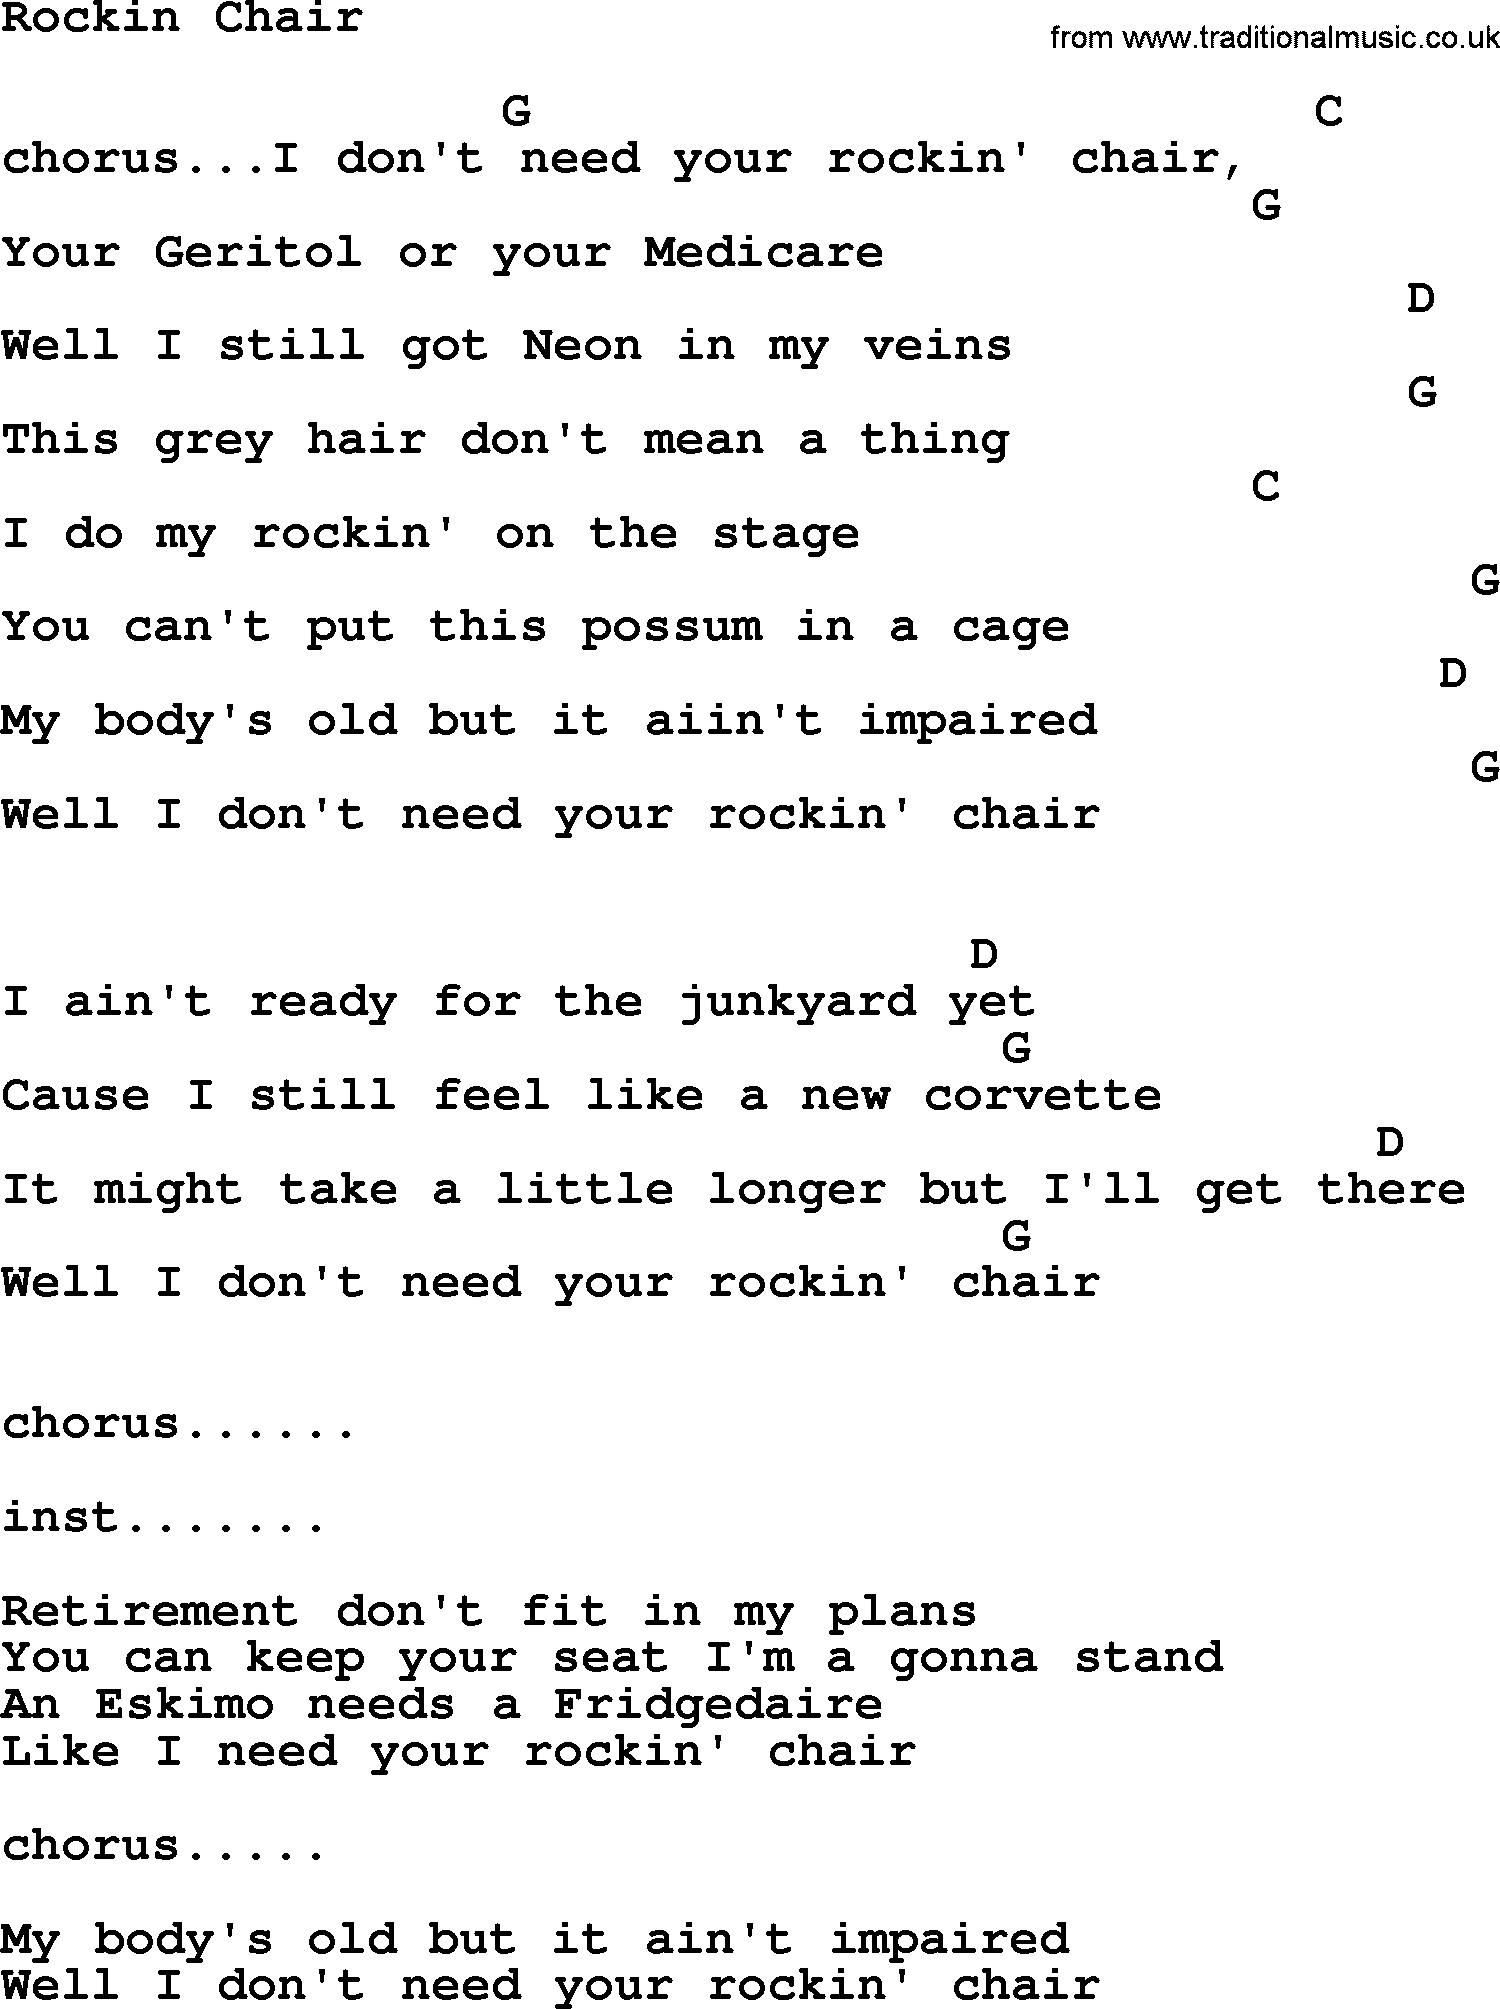 George Jones song: Rockin Chair, lyrics and chords